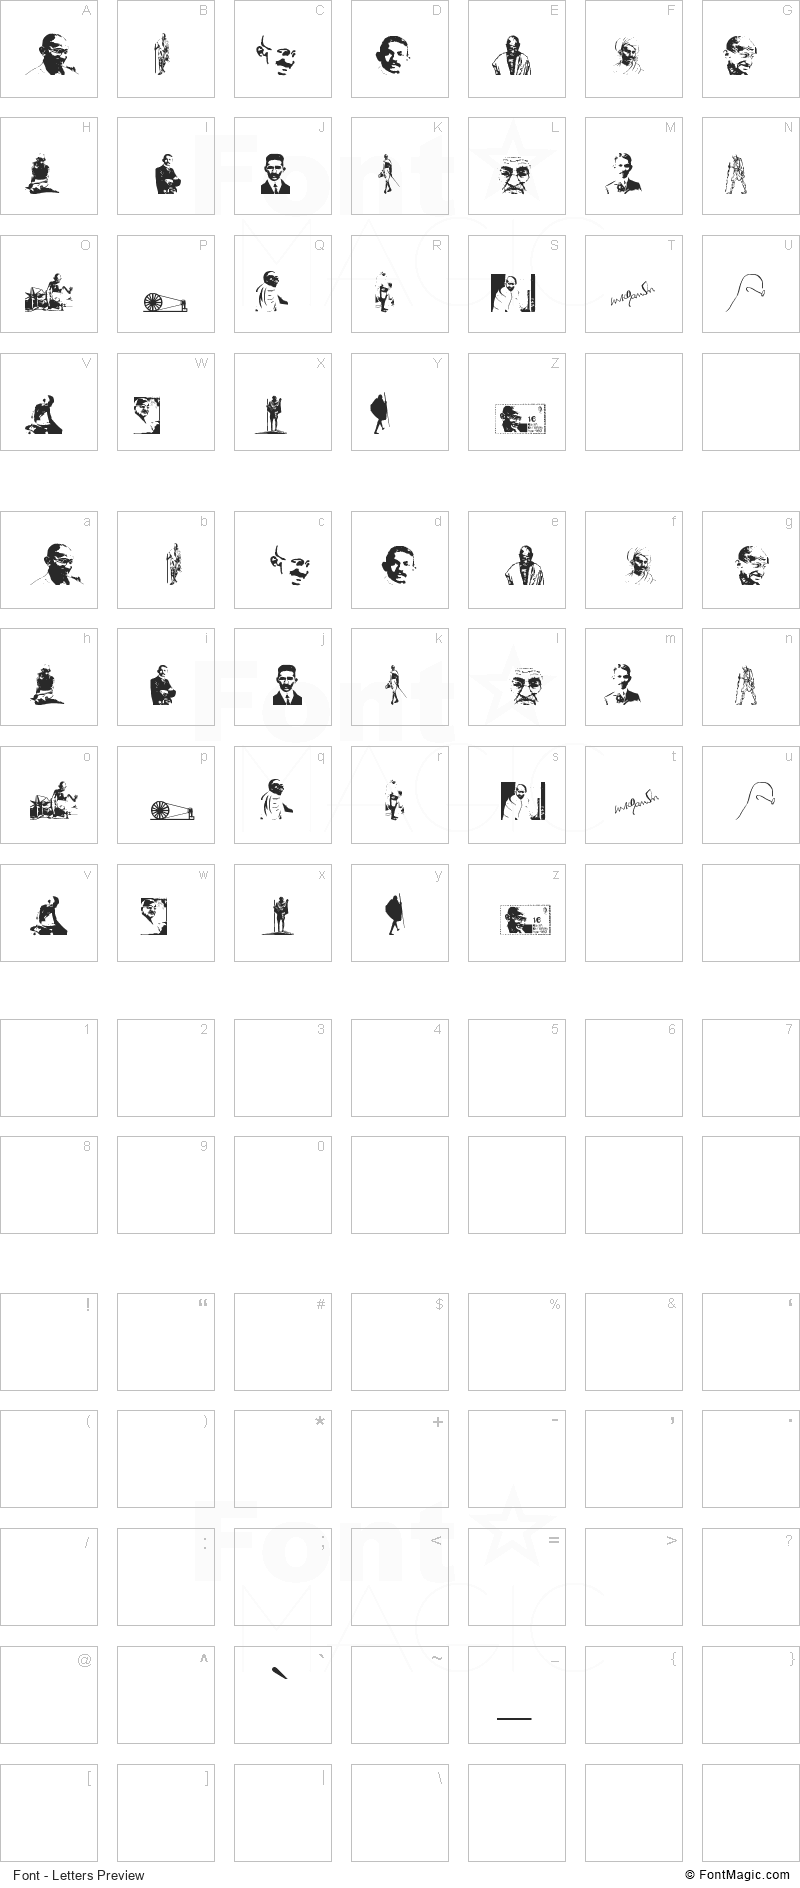 Mahatma Gandhi Font - All Latters Preview Chart